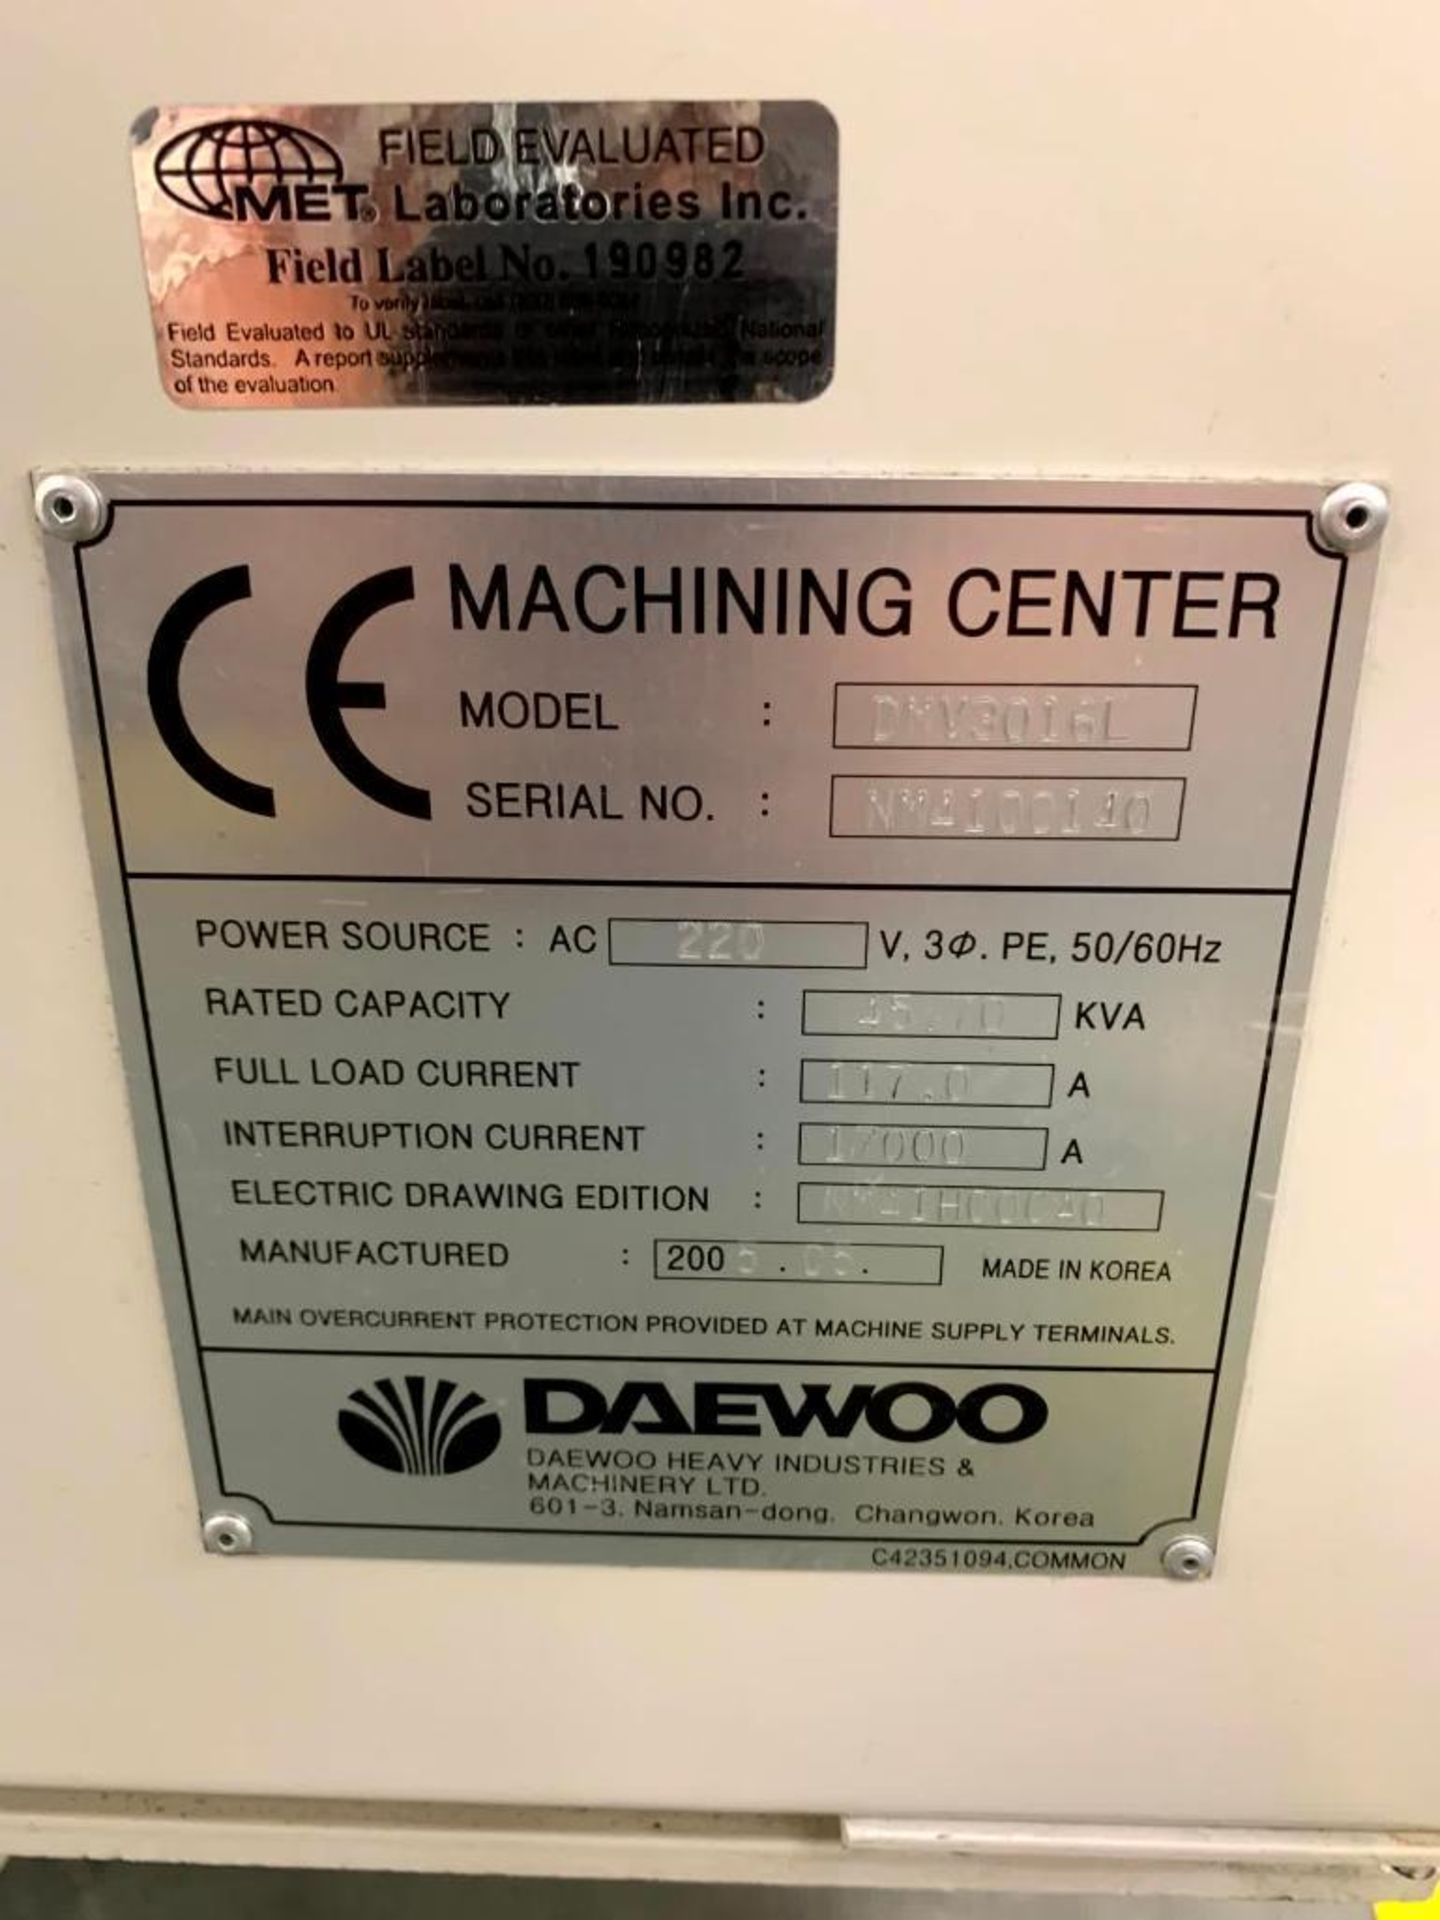 2005 Daewoo DMV3016L CNC Vertical Machining Center, Fanuc Series OI-MC CNC, 17" X 36" T-Slot Table, - Image 12 of 12